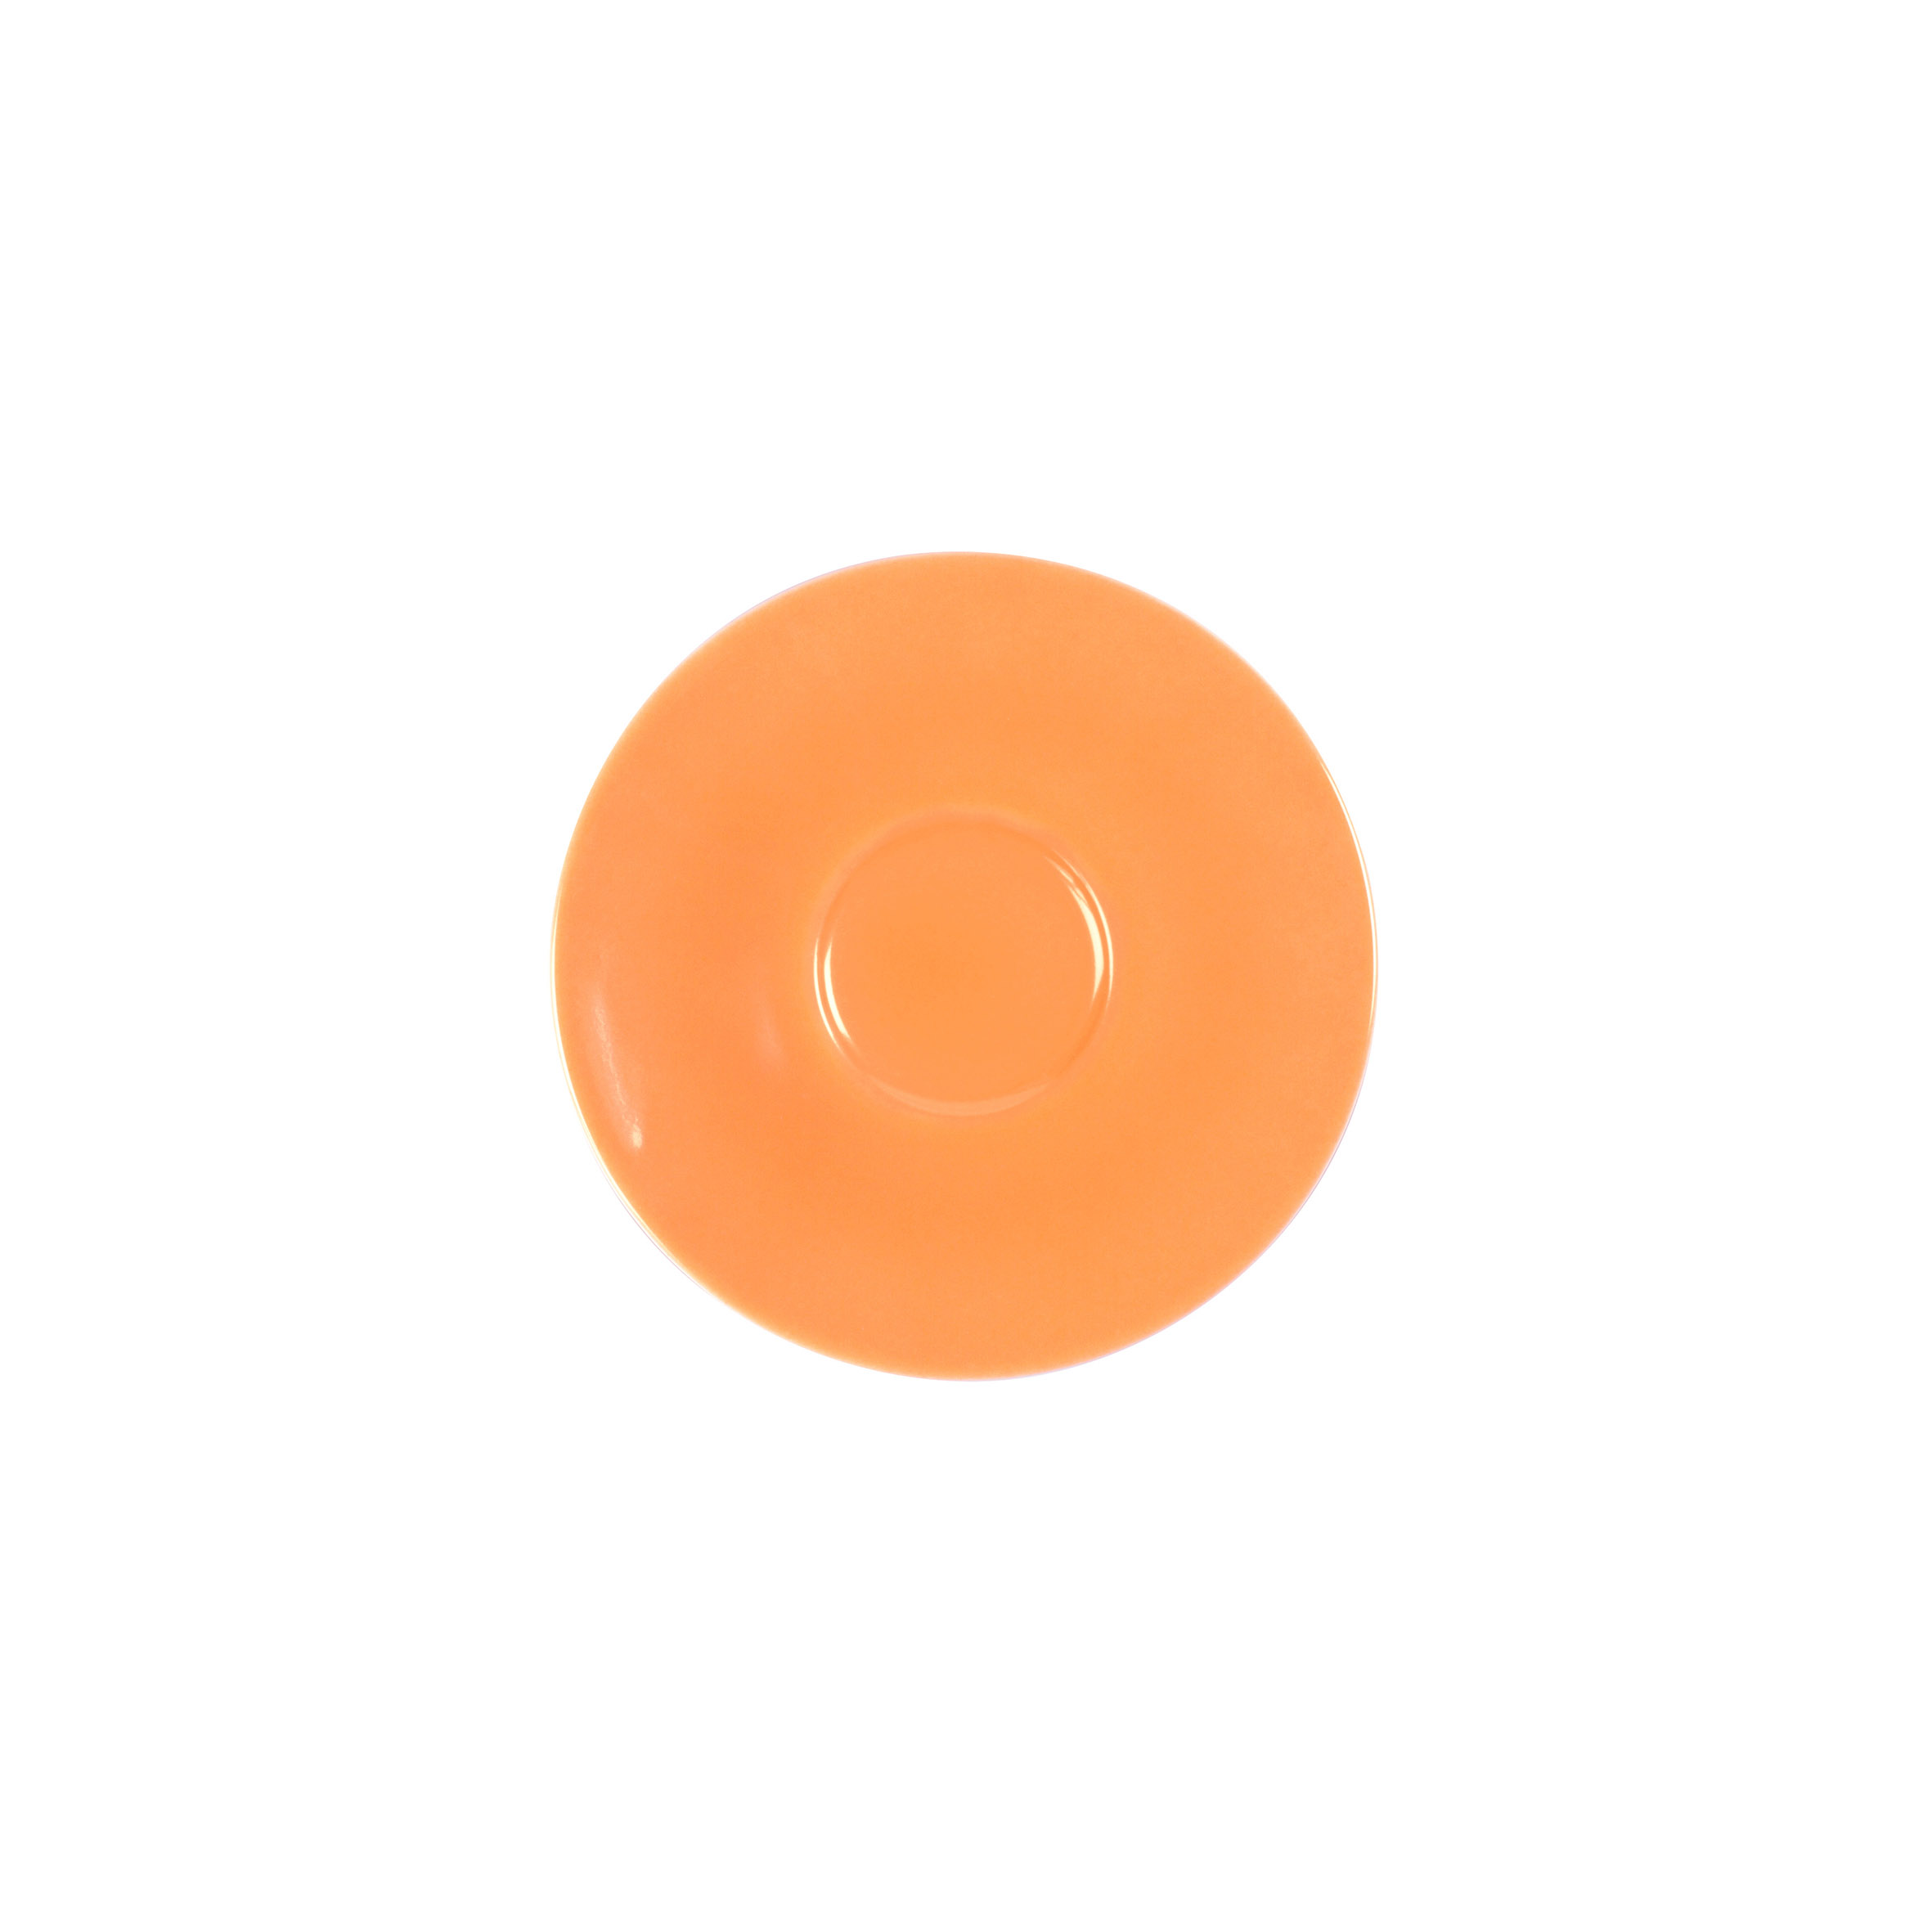 Kombi-Untertasse 16 cm, Farbe: apricot / aprikose,